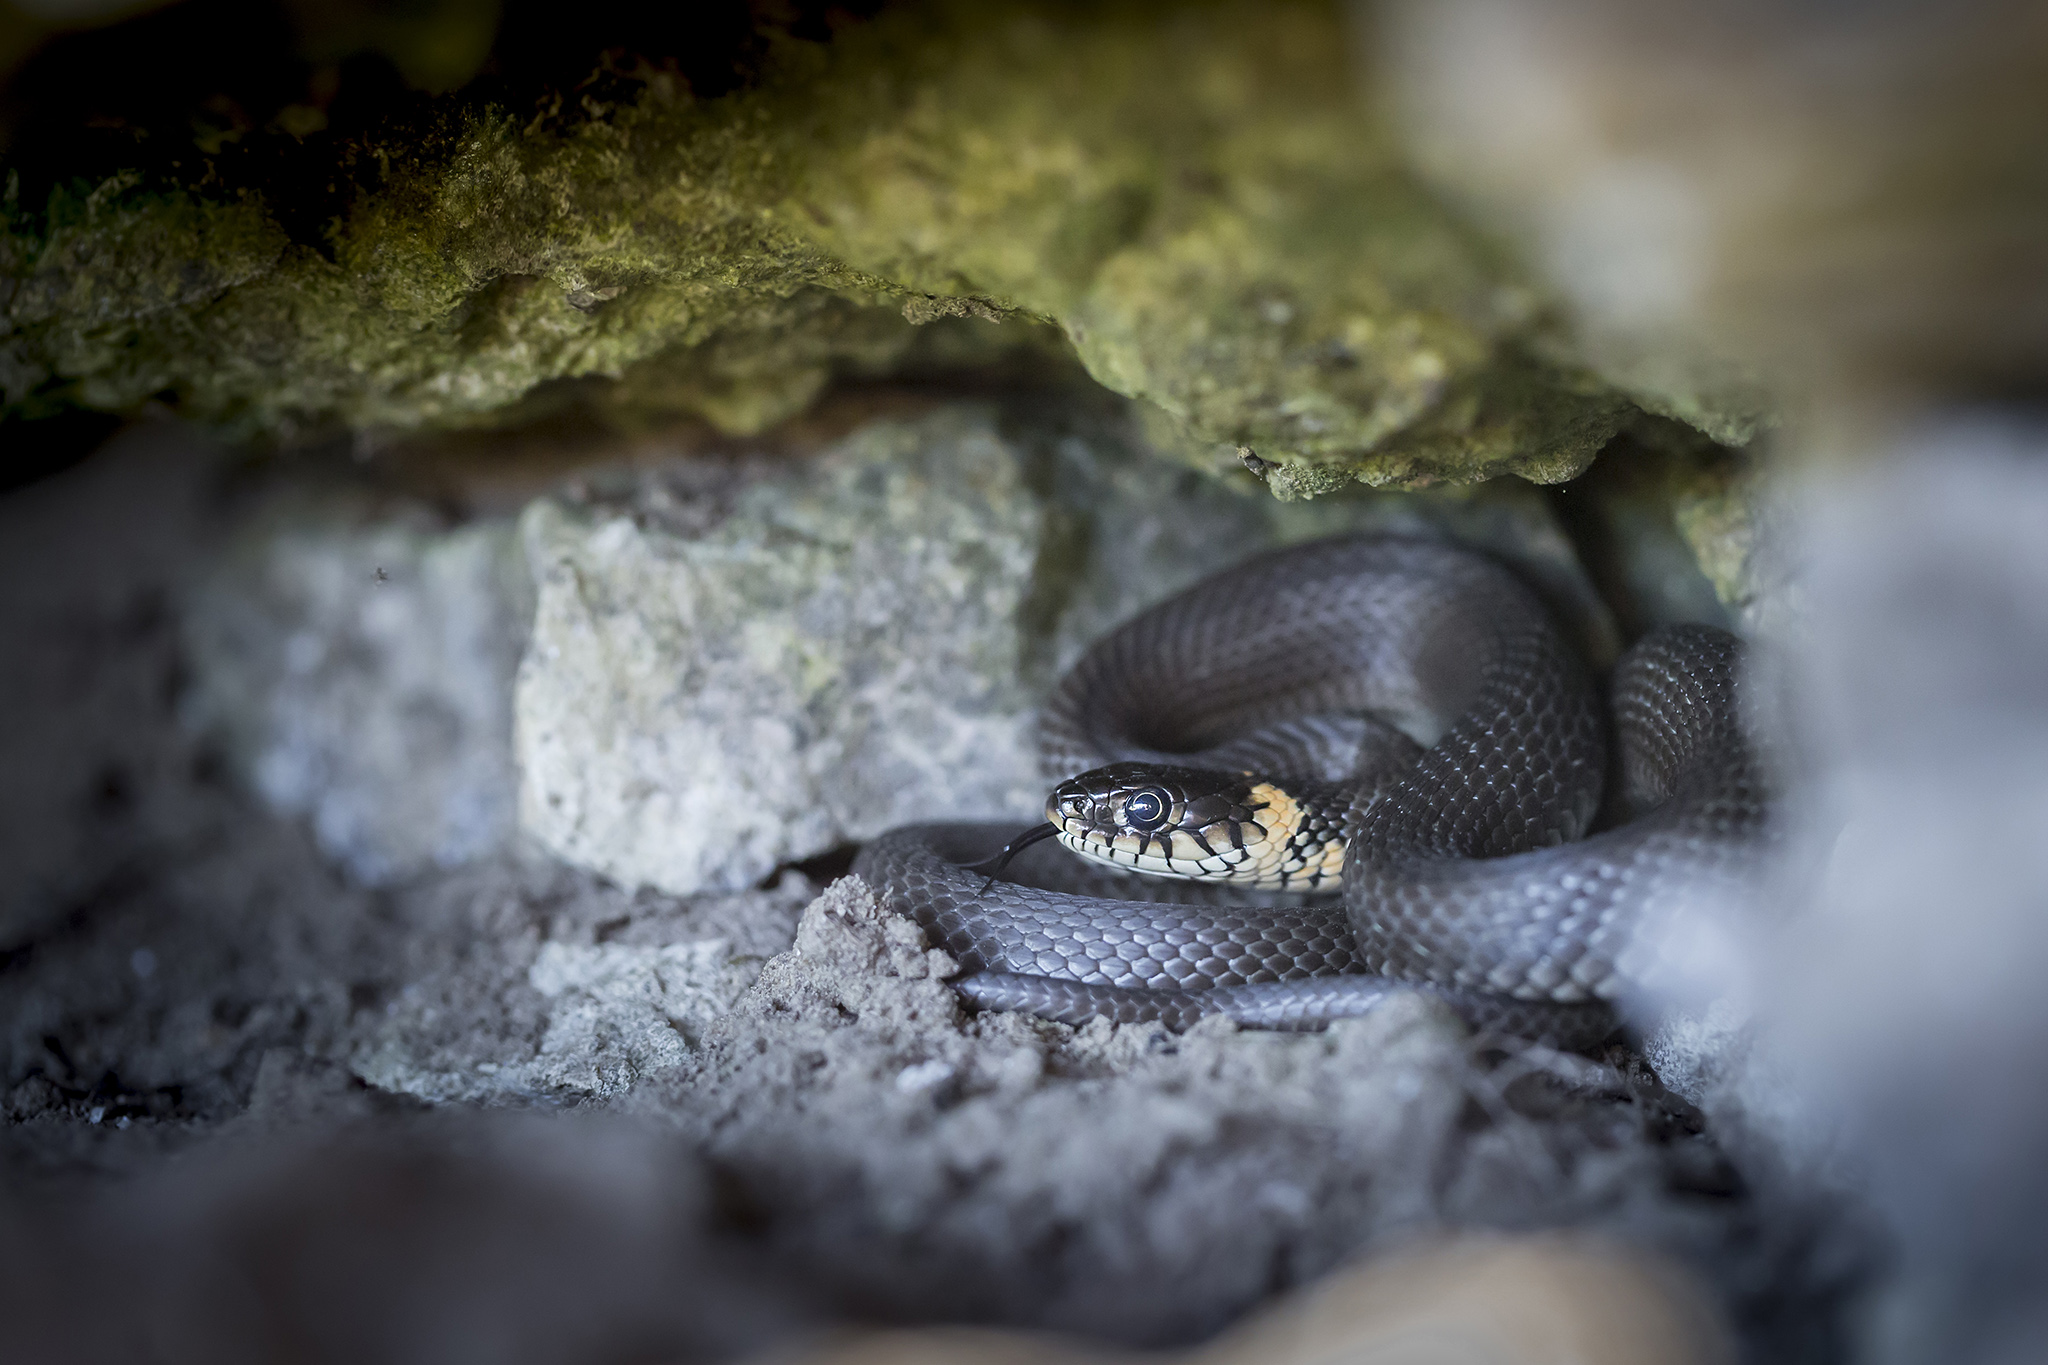 64Grass snake (Natrix natrix)